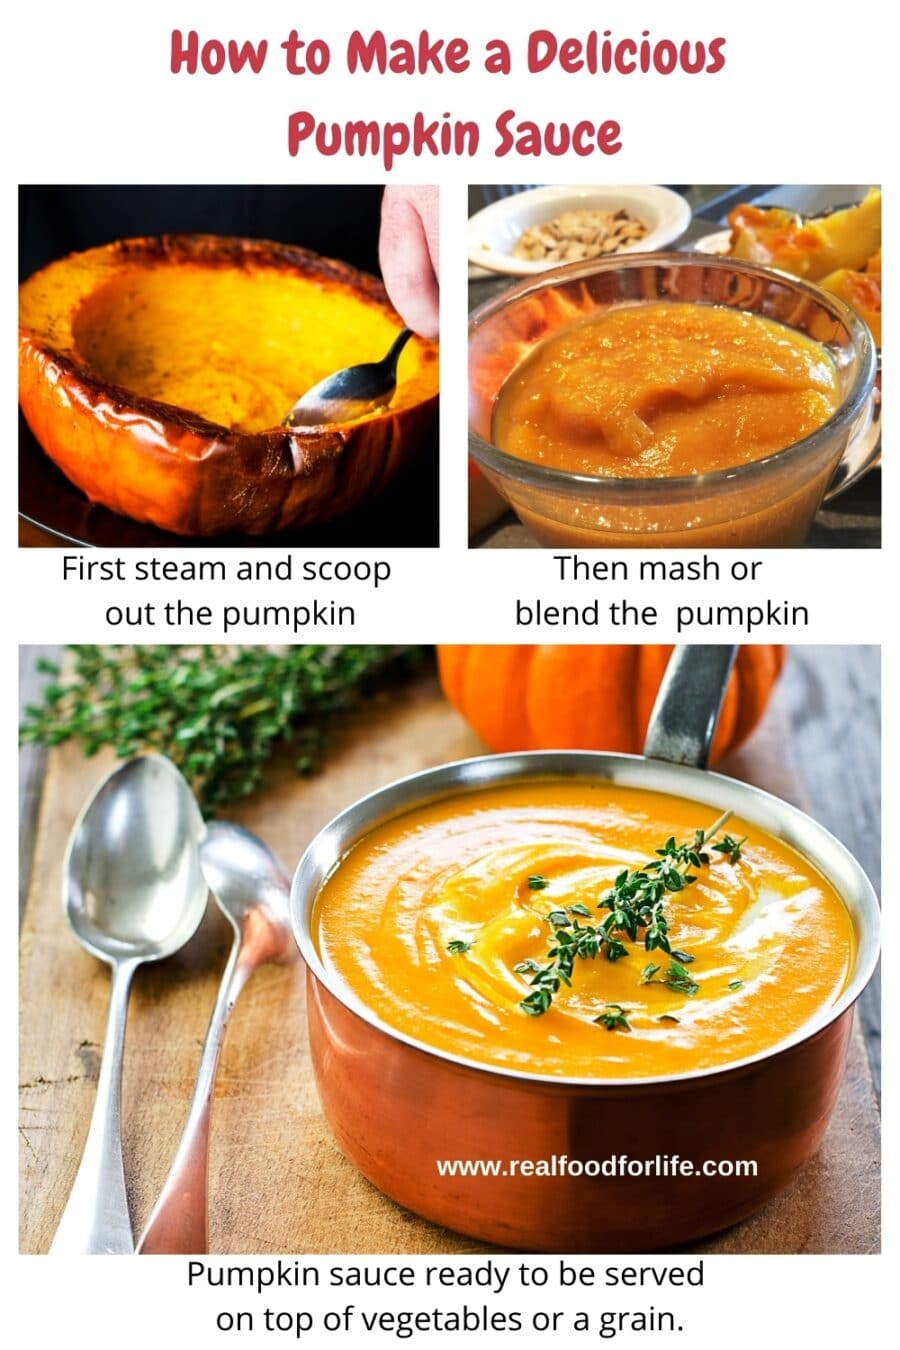 Pumpkin Sauce recipe